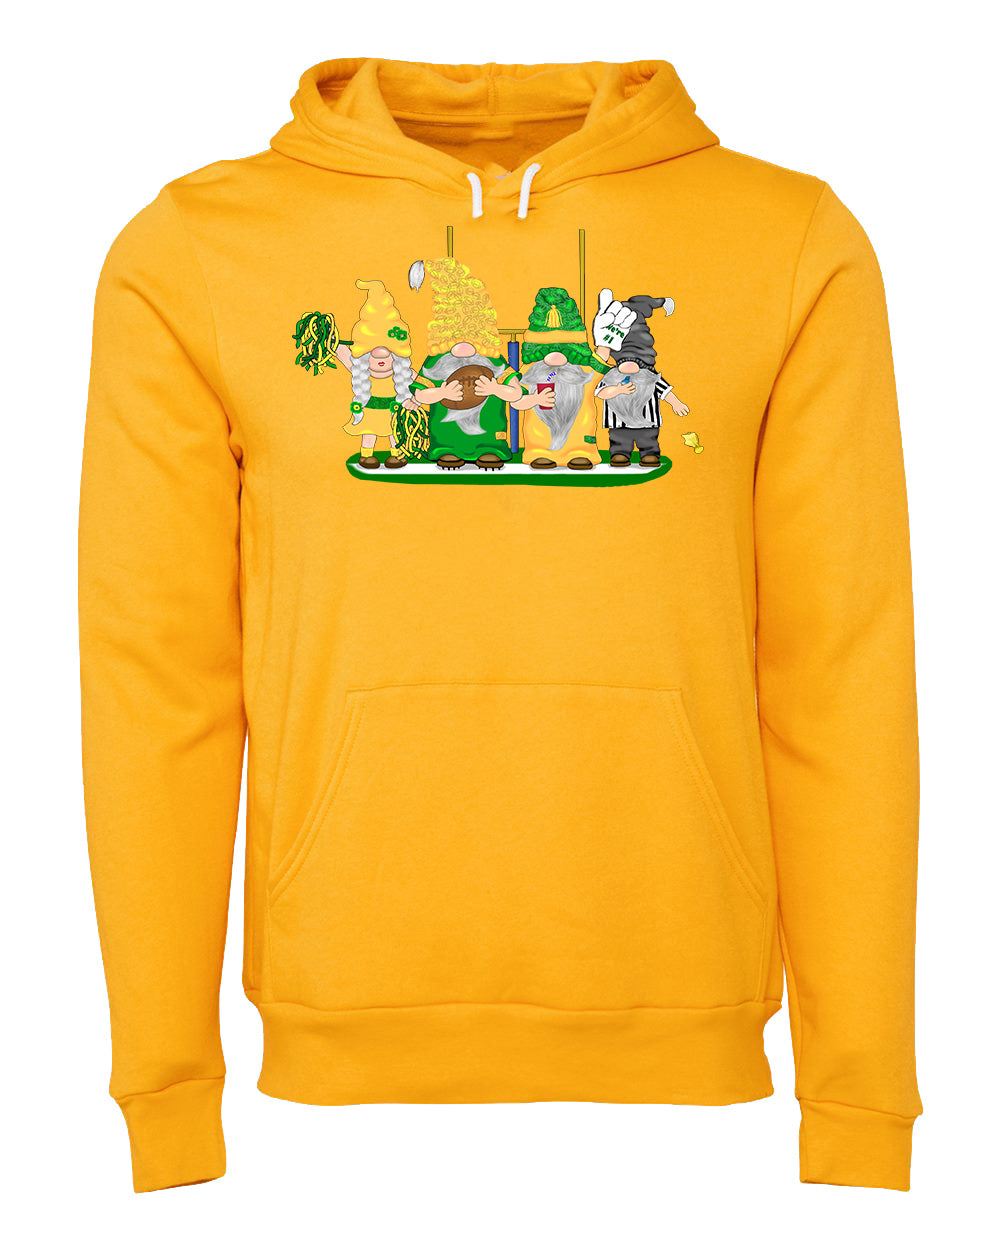 Green & Yellow Football Gnomes (similar to Eugene) on Unisex Hoodie